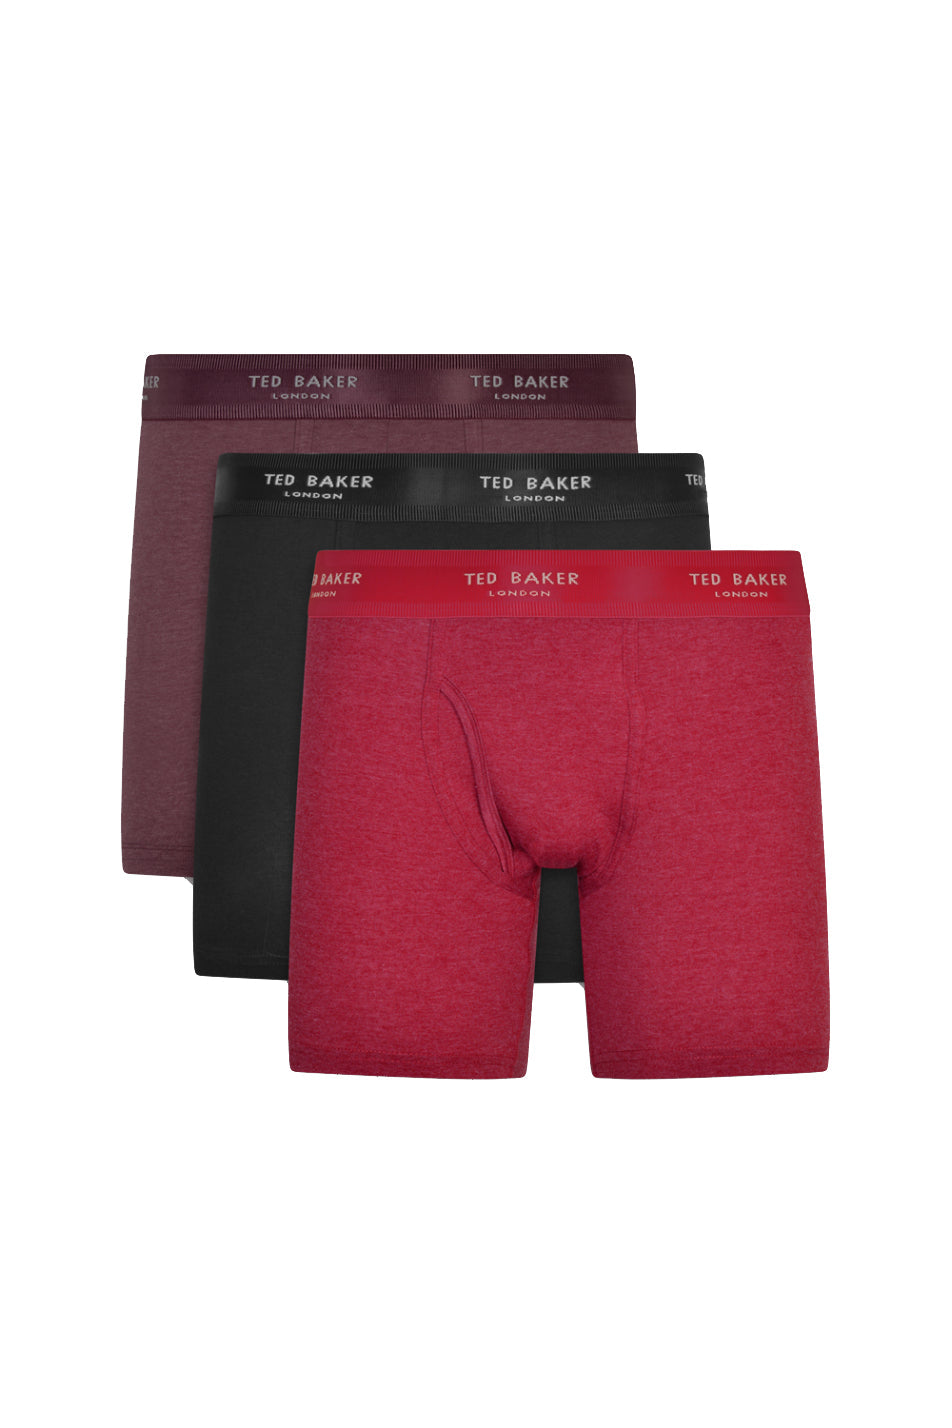 Ted Baker 3 Pack Men's Cotton Boxer Brief — Pants & Socks